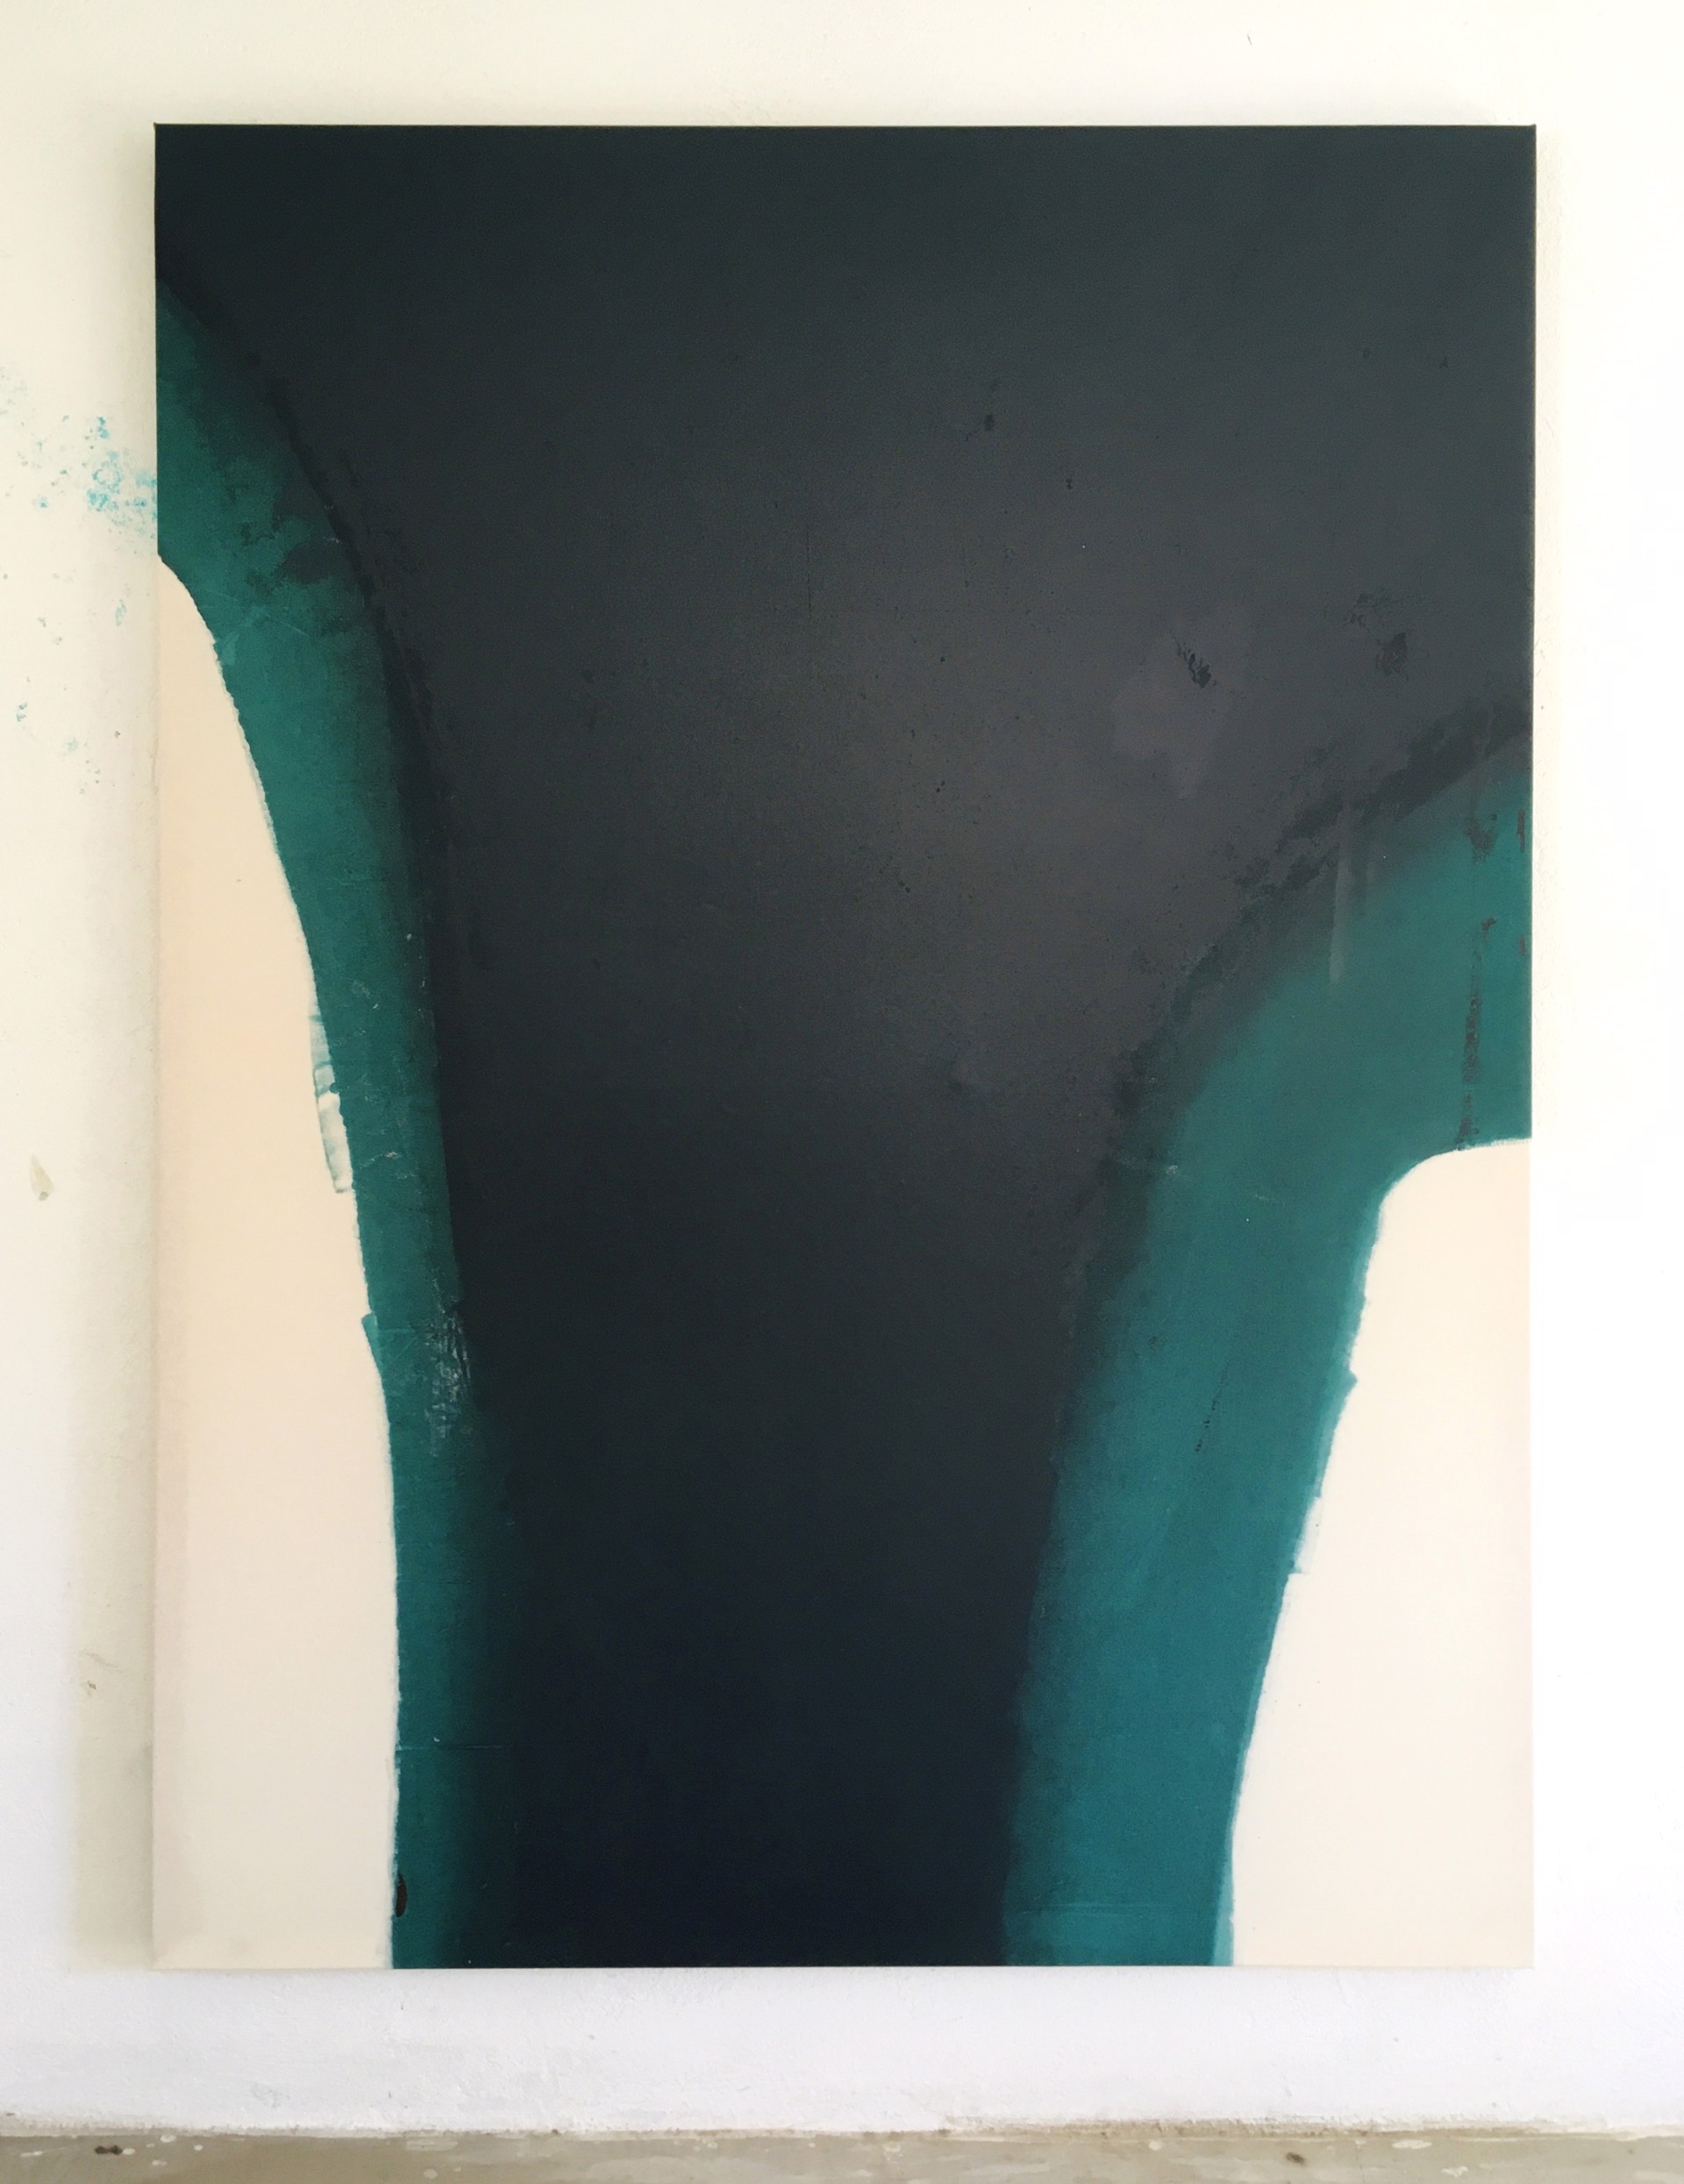 Untitled (Black and Green Leak) by Pati Baztán